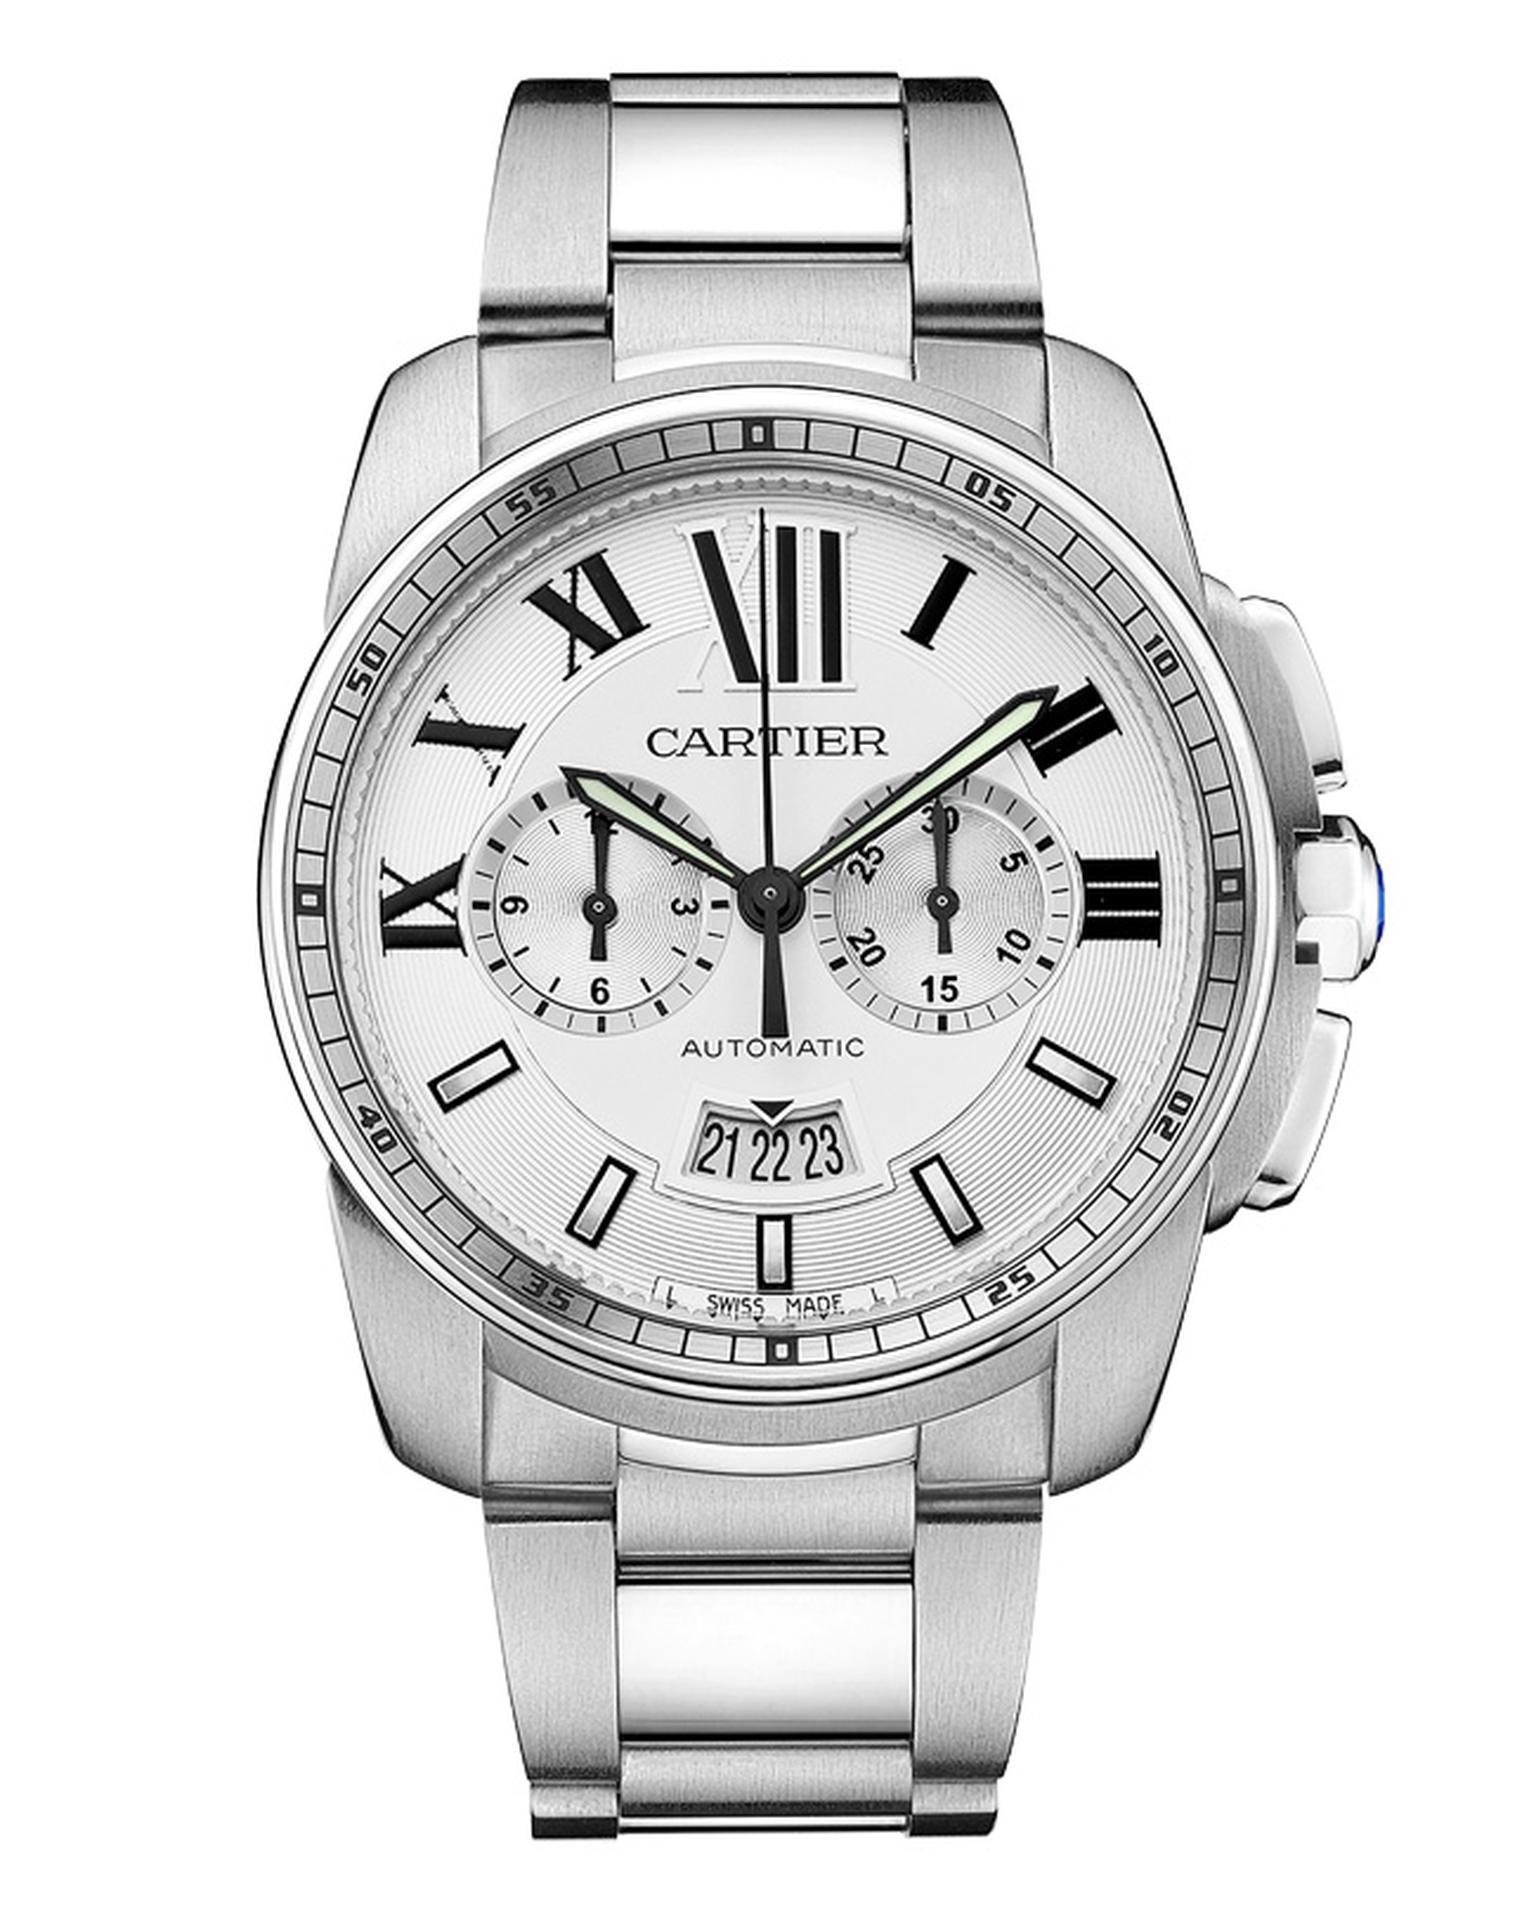 Calibre de Cartier Chronograph watch_20130418_Main